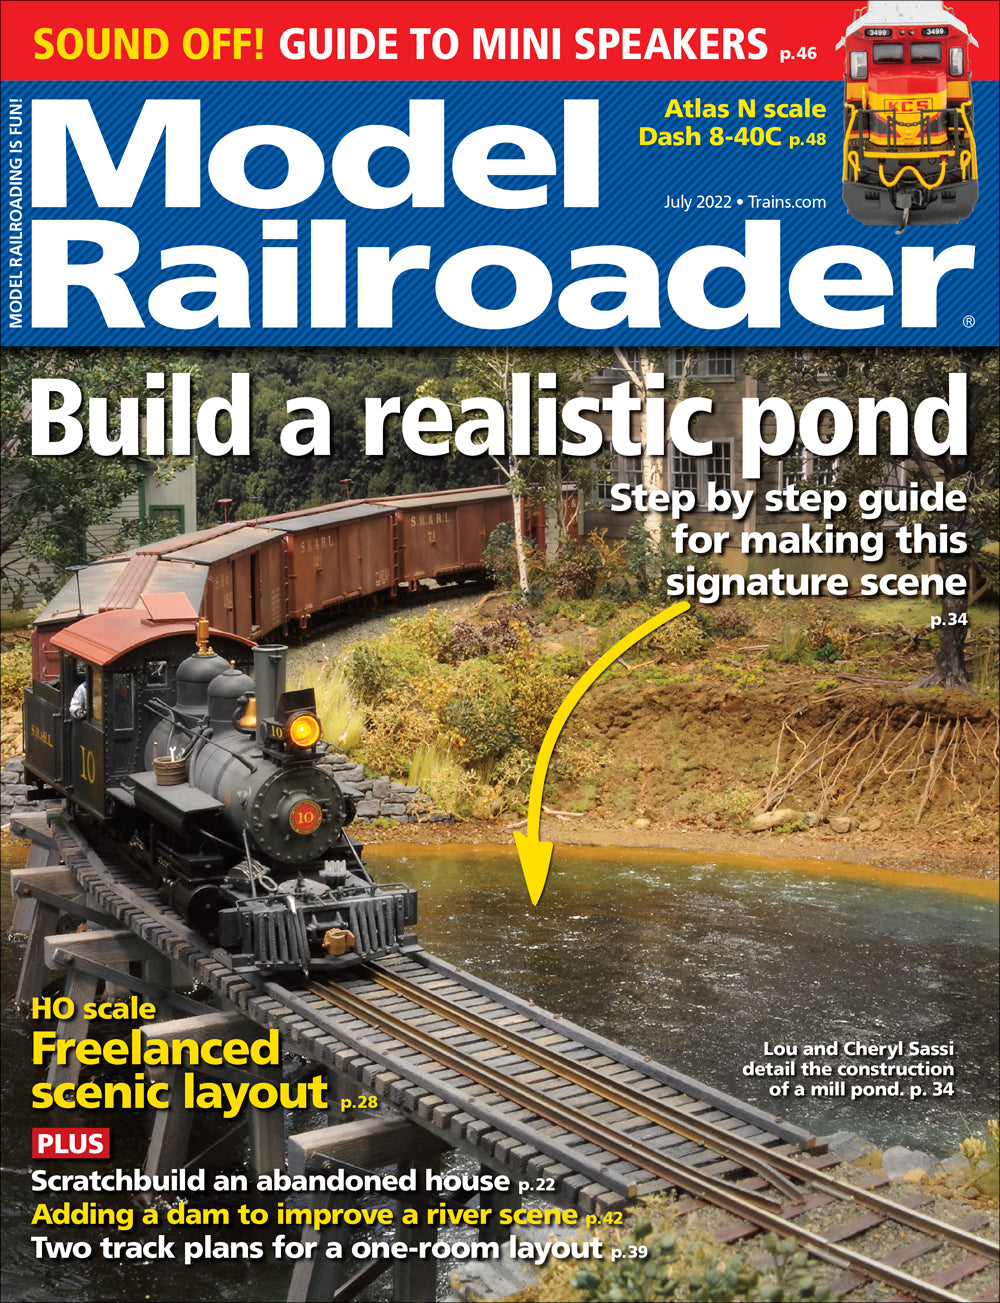 Model Railroader - Magazine - Vol. 89 - Issue 07 - July 2022